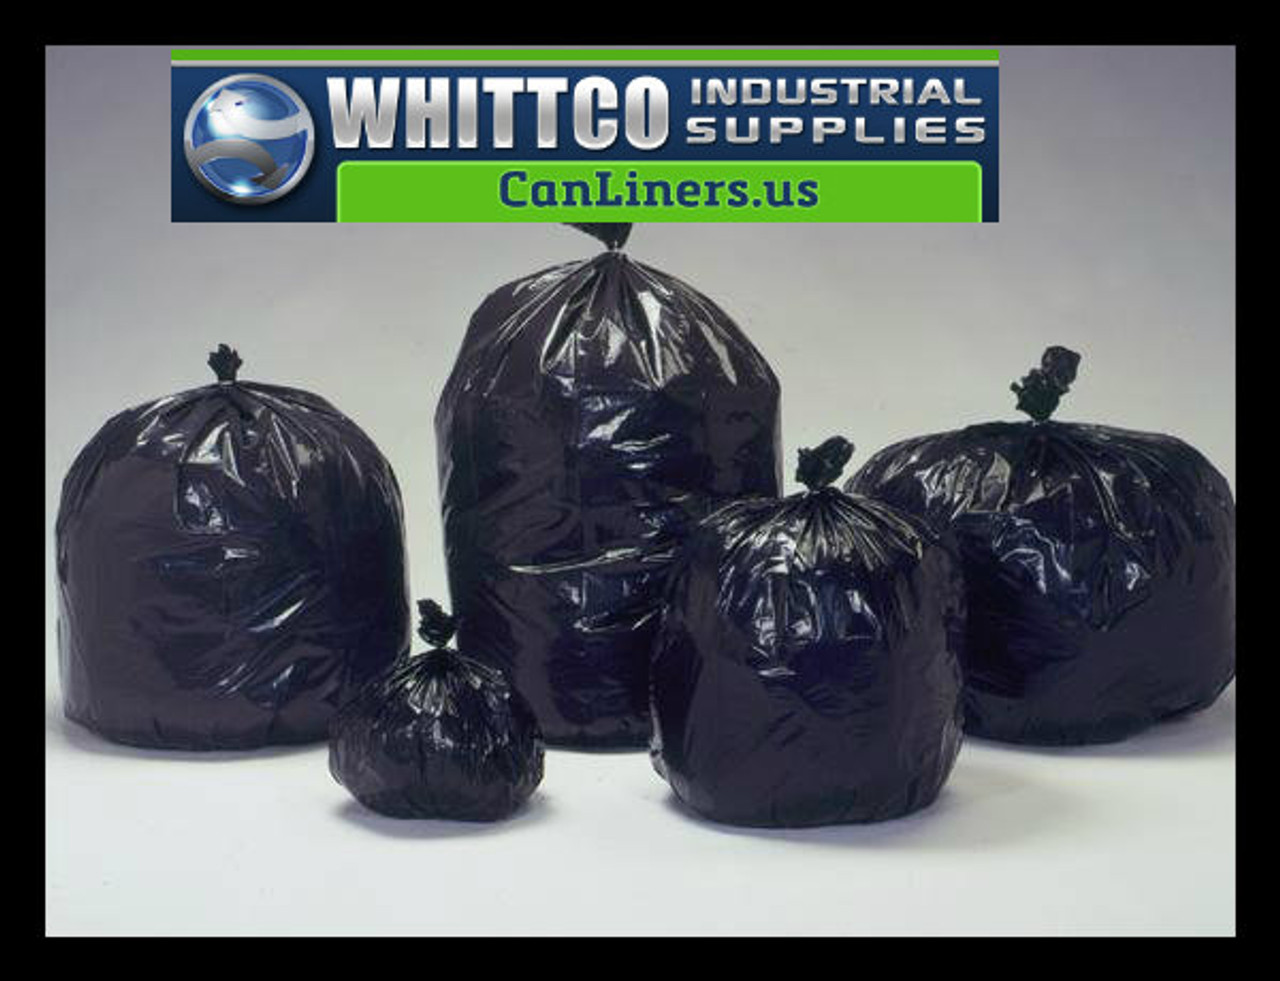 Global Industrial™ Heavy Duty Black Trash Bags - 20-30 Gal, 1.5